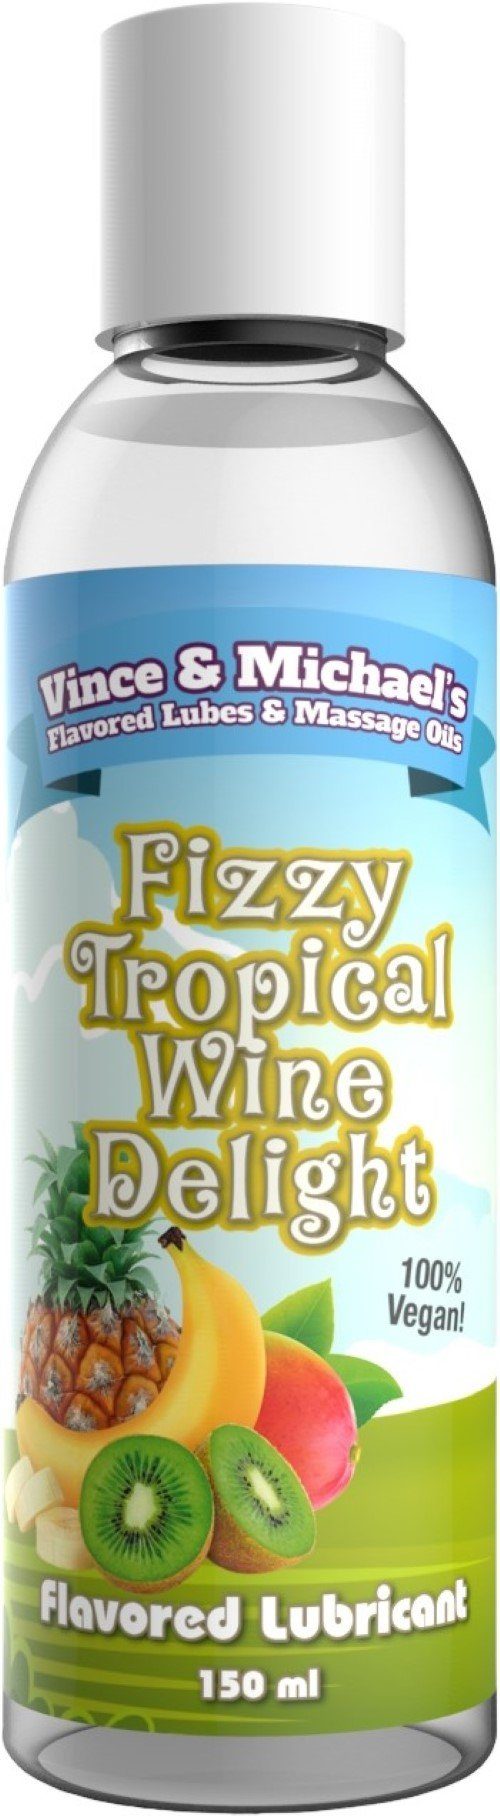 Vince & ml - MICHAEL's 150 VINCE Michael´s Tropical Gleitgel & 150ml Fizzy Delight Wine